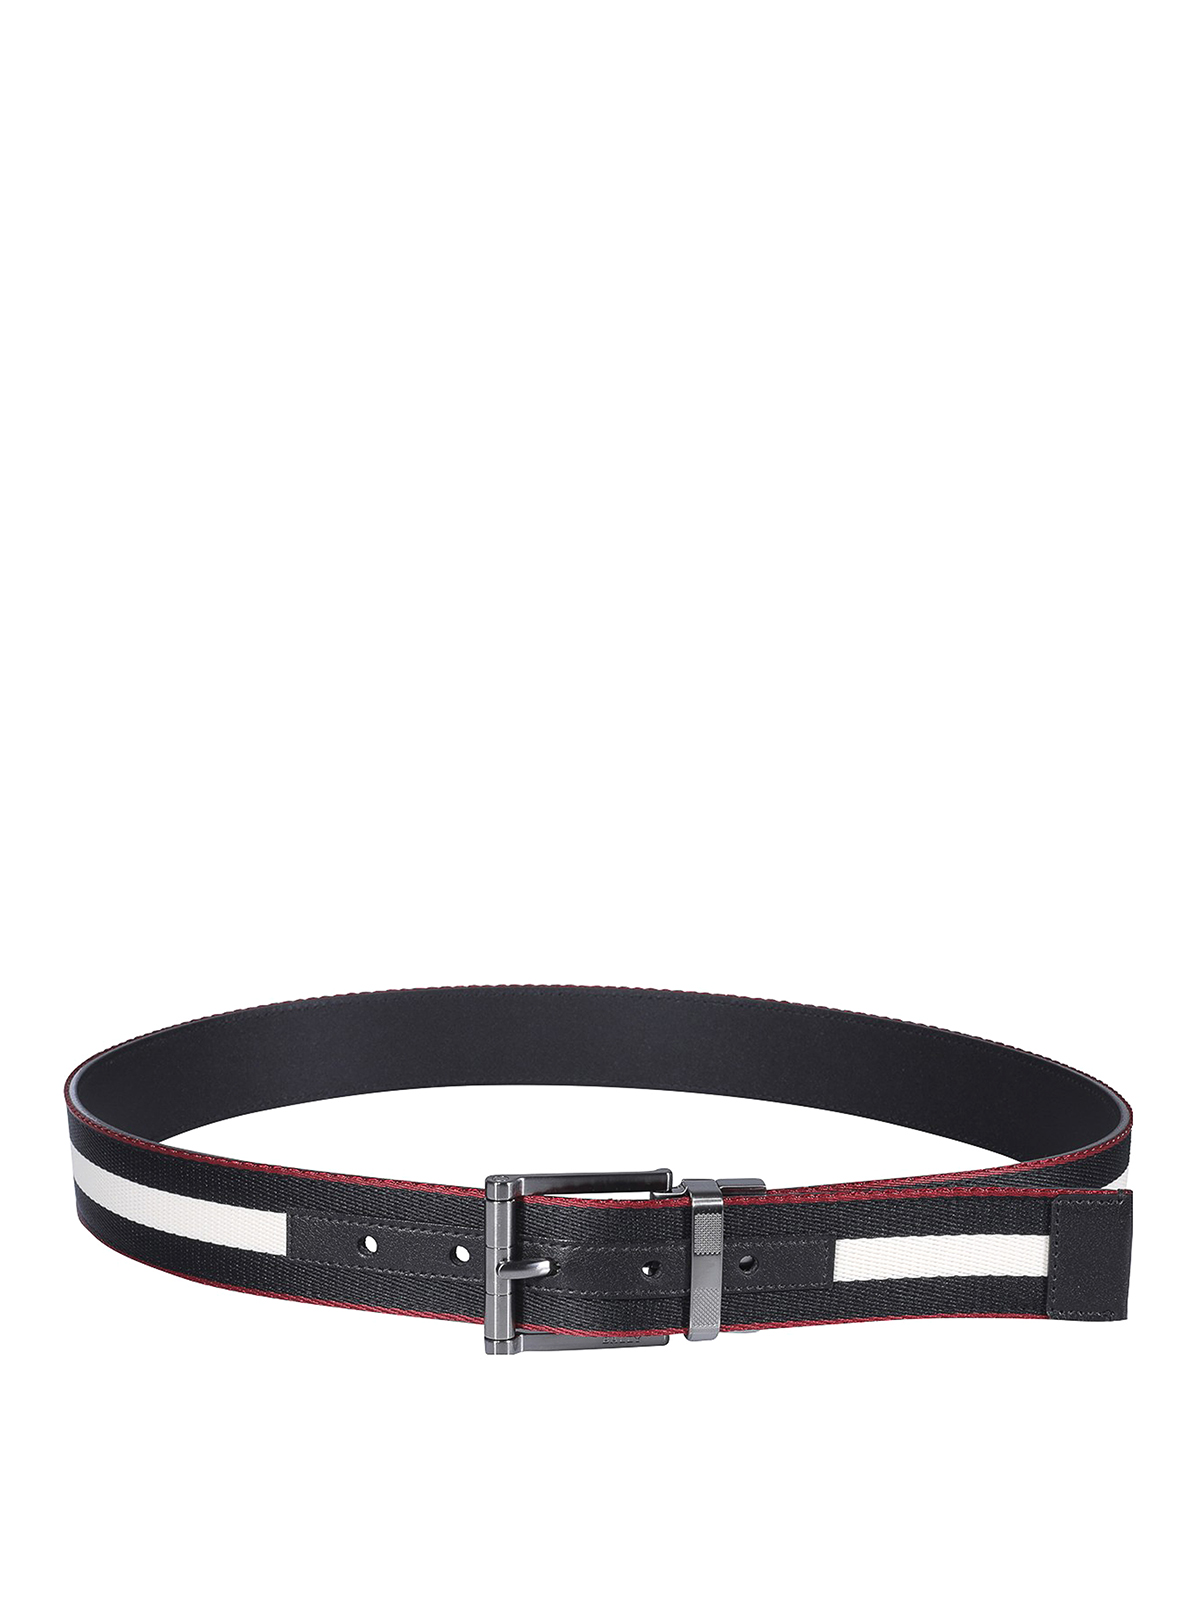 Belts Bally - Taylan belt - TAYLAN35MF070 | Shop online at iKRIX